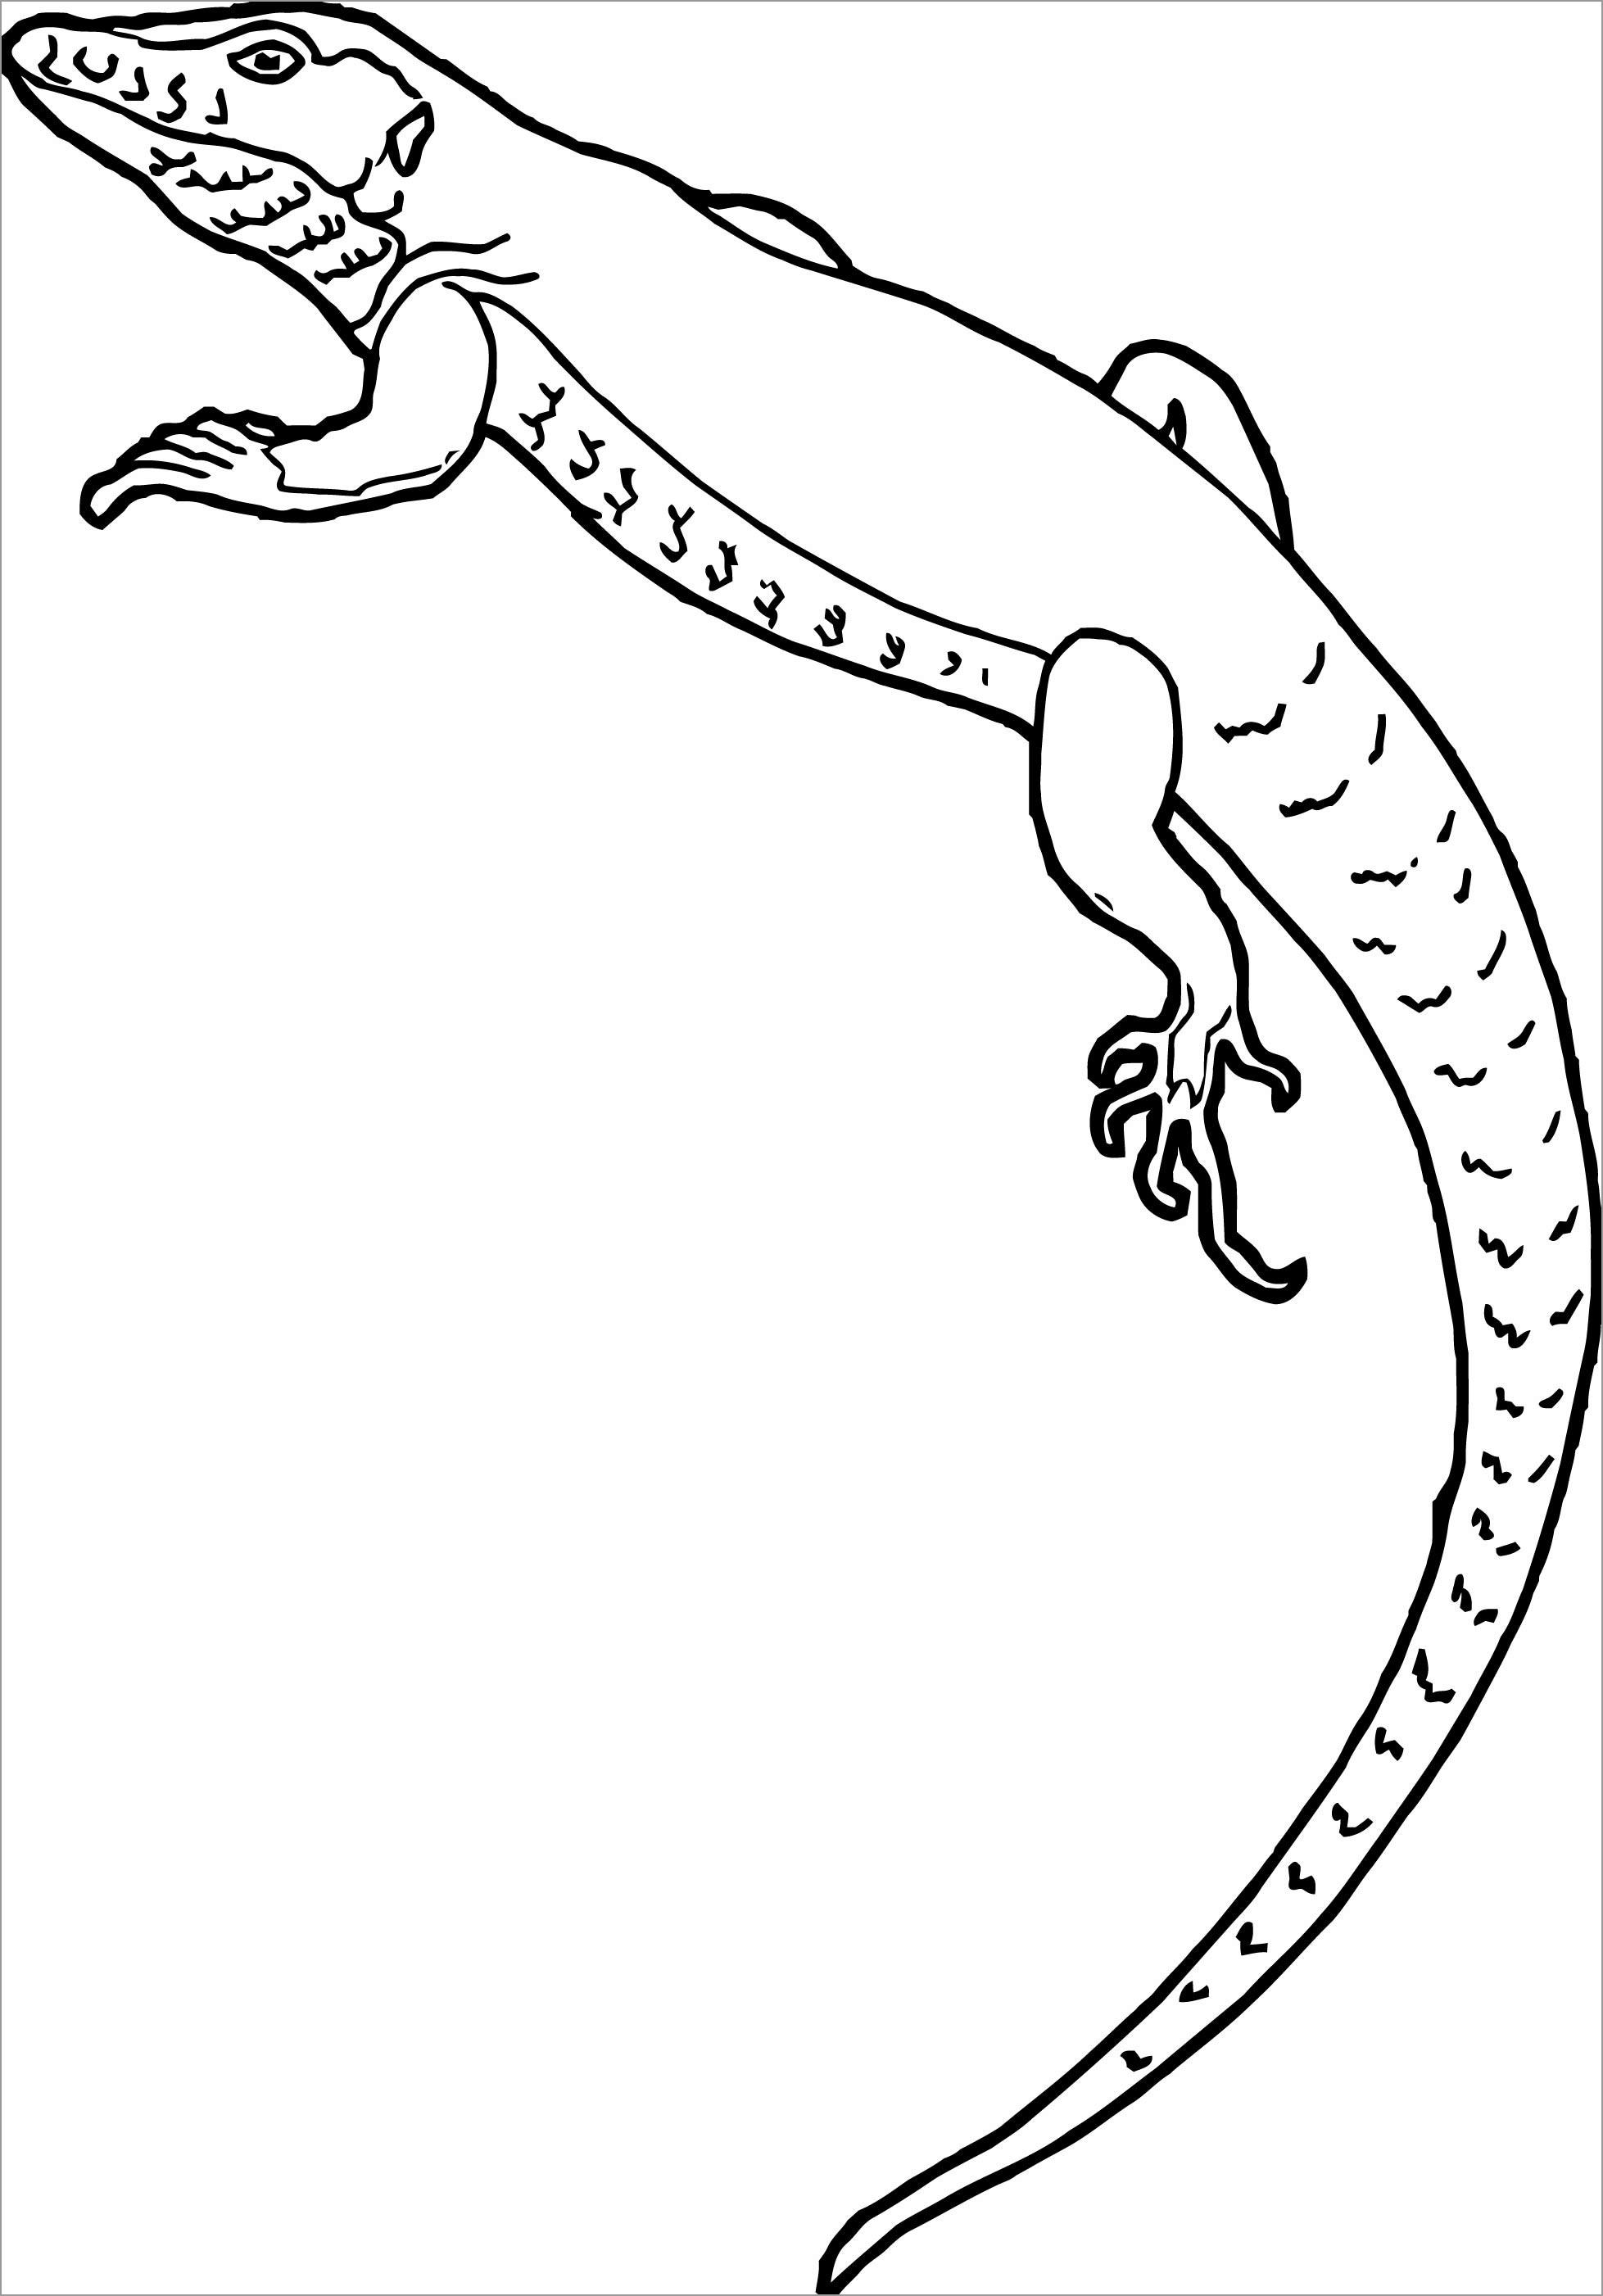 Printable Lizard Coloring Page